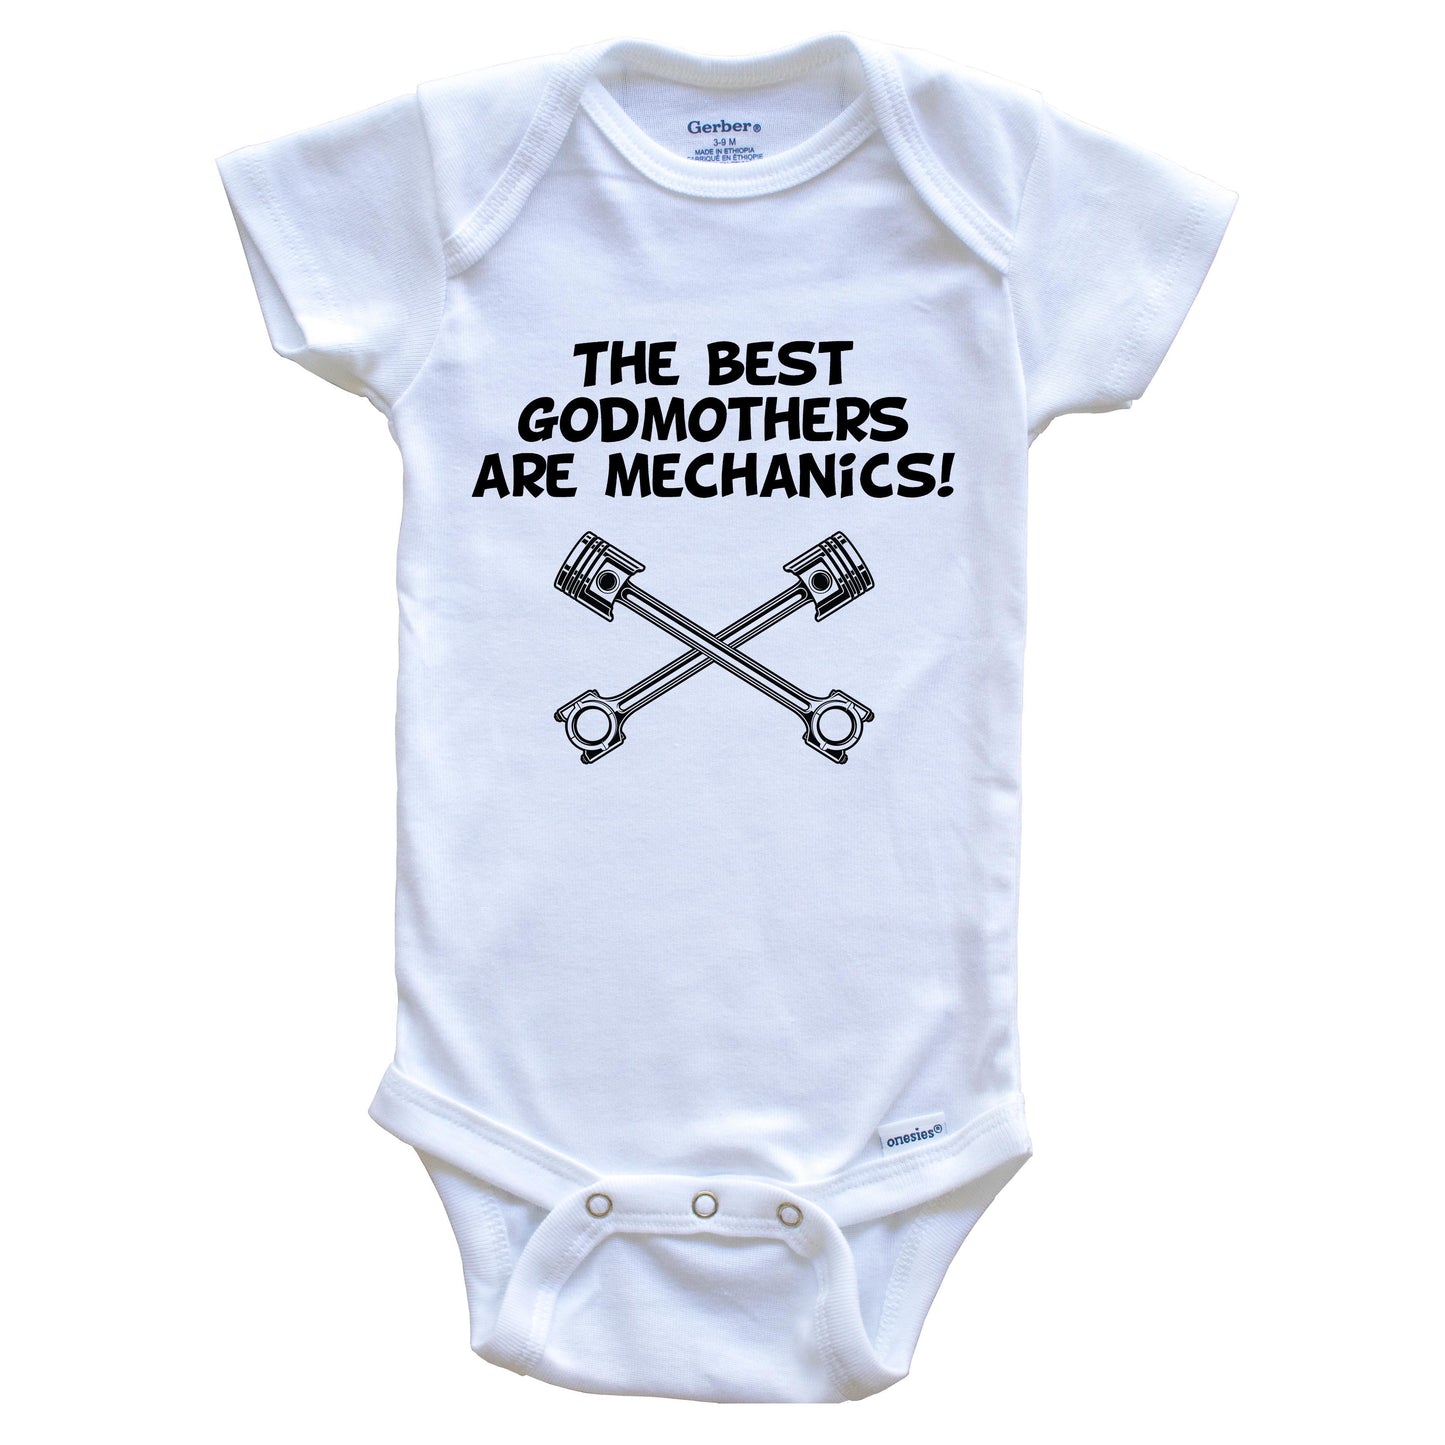 The Best Godmothers Are Mechanics Funny Godchild Baby Onesie